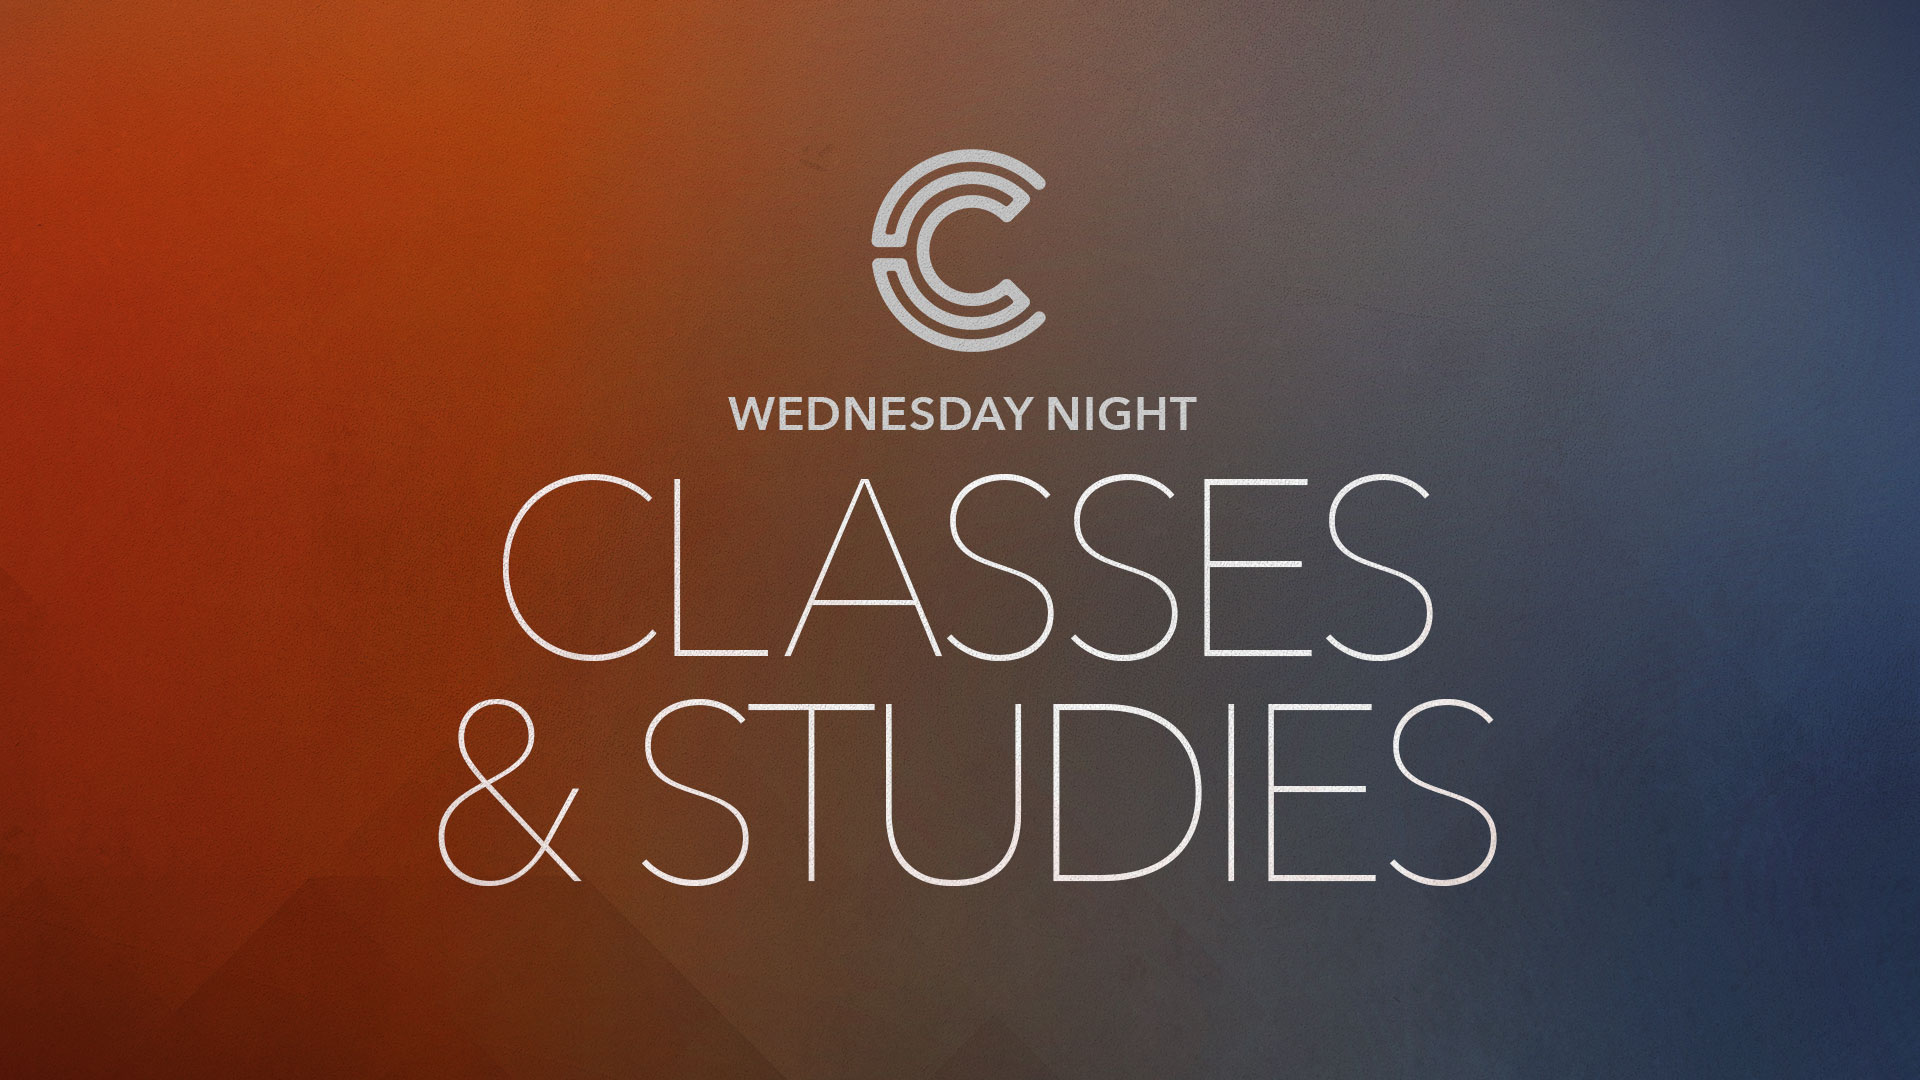 Wednesday Night Classes + Studies